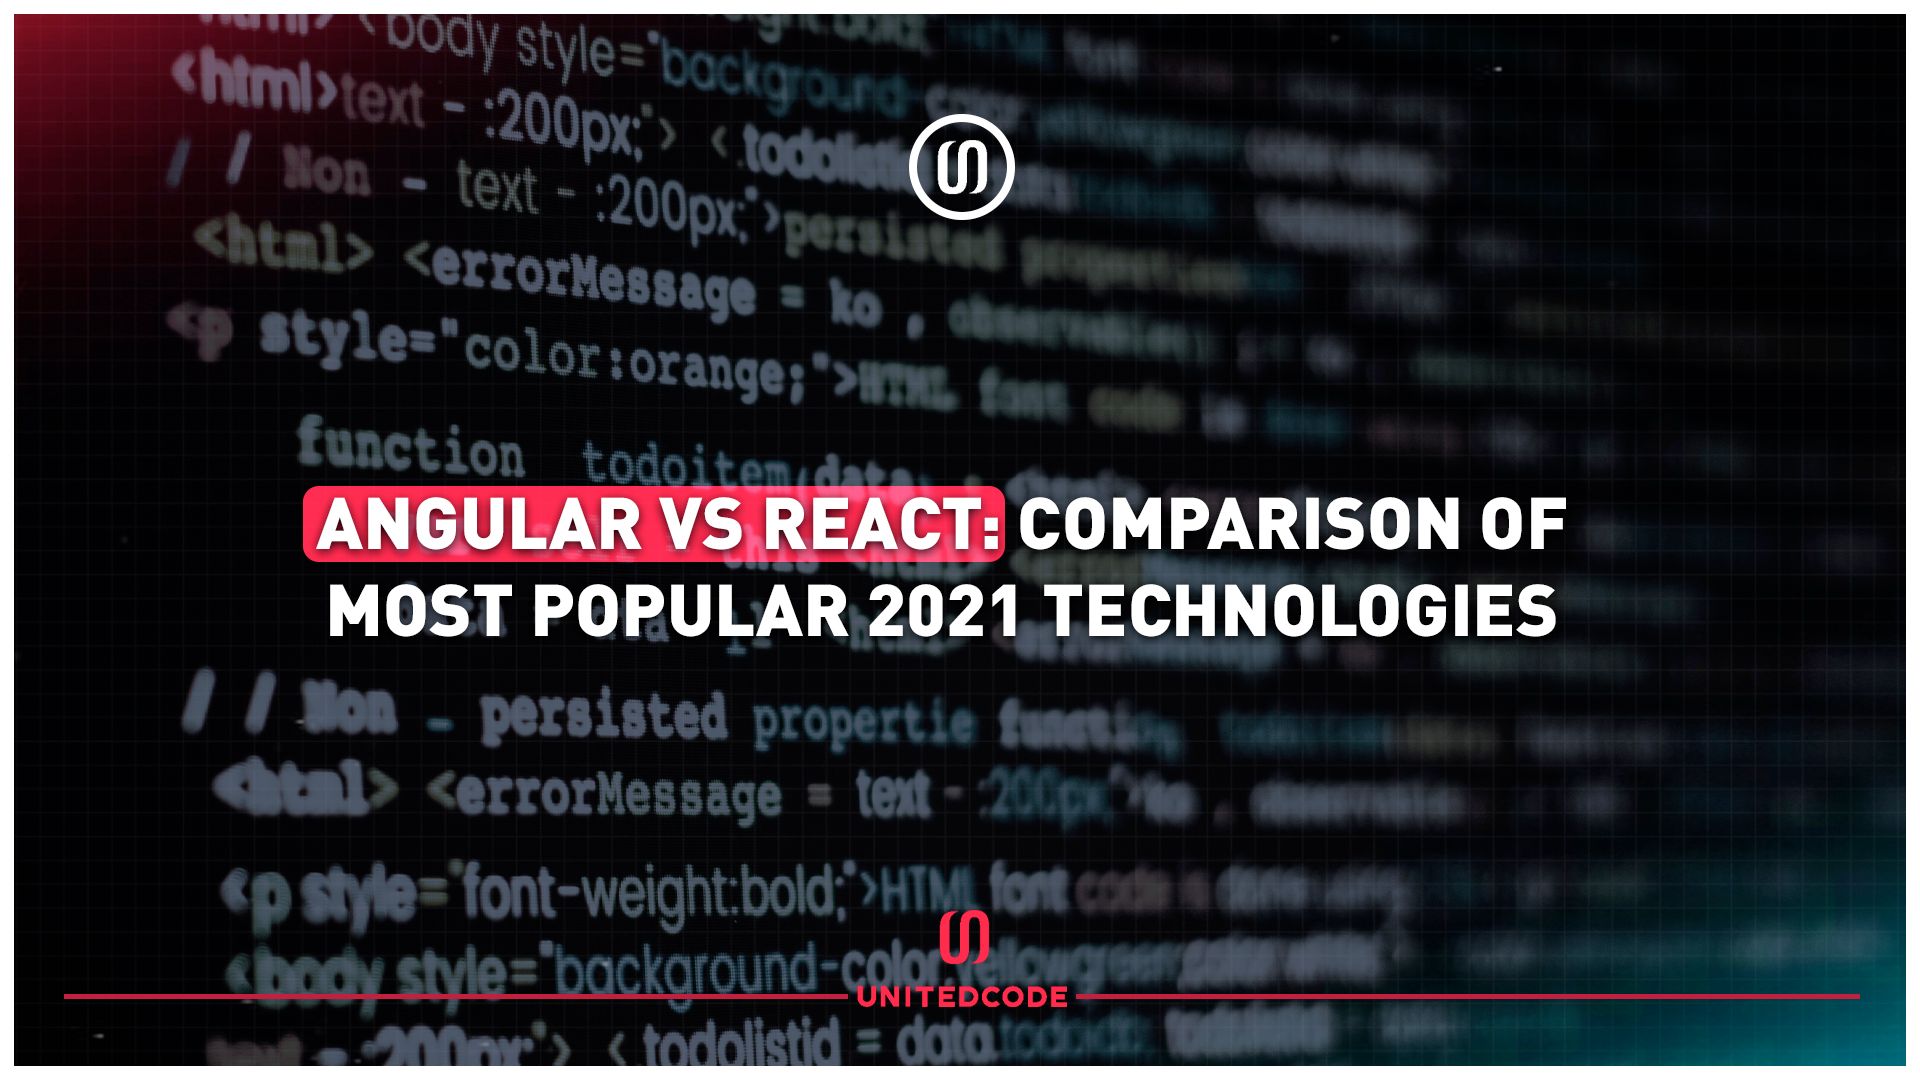 angular vs react: comparison of most popular 2021 technologies